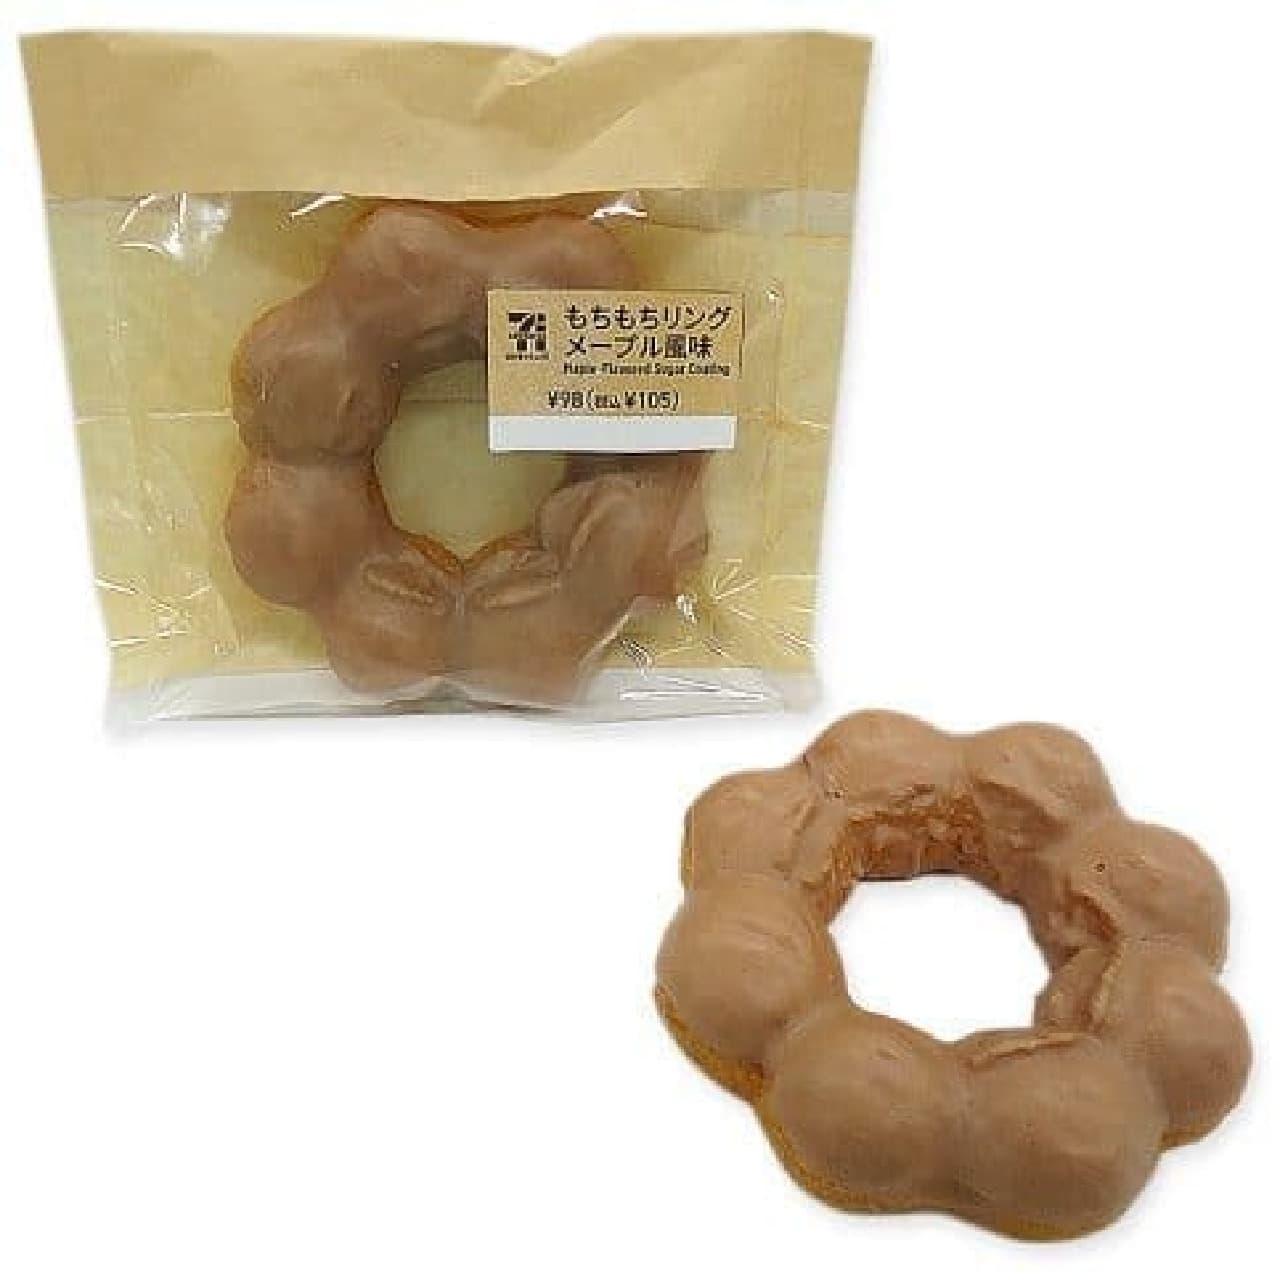 7-ELEVEN "Mochimochi Ring Maple Flavor"